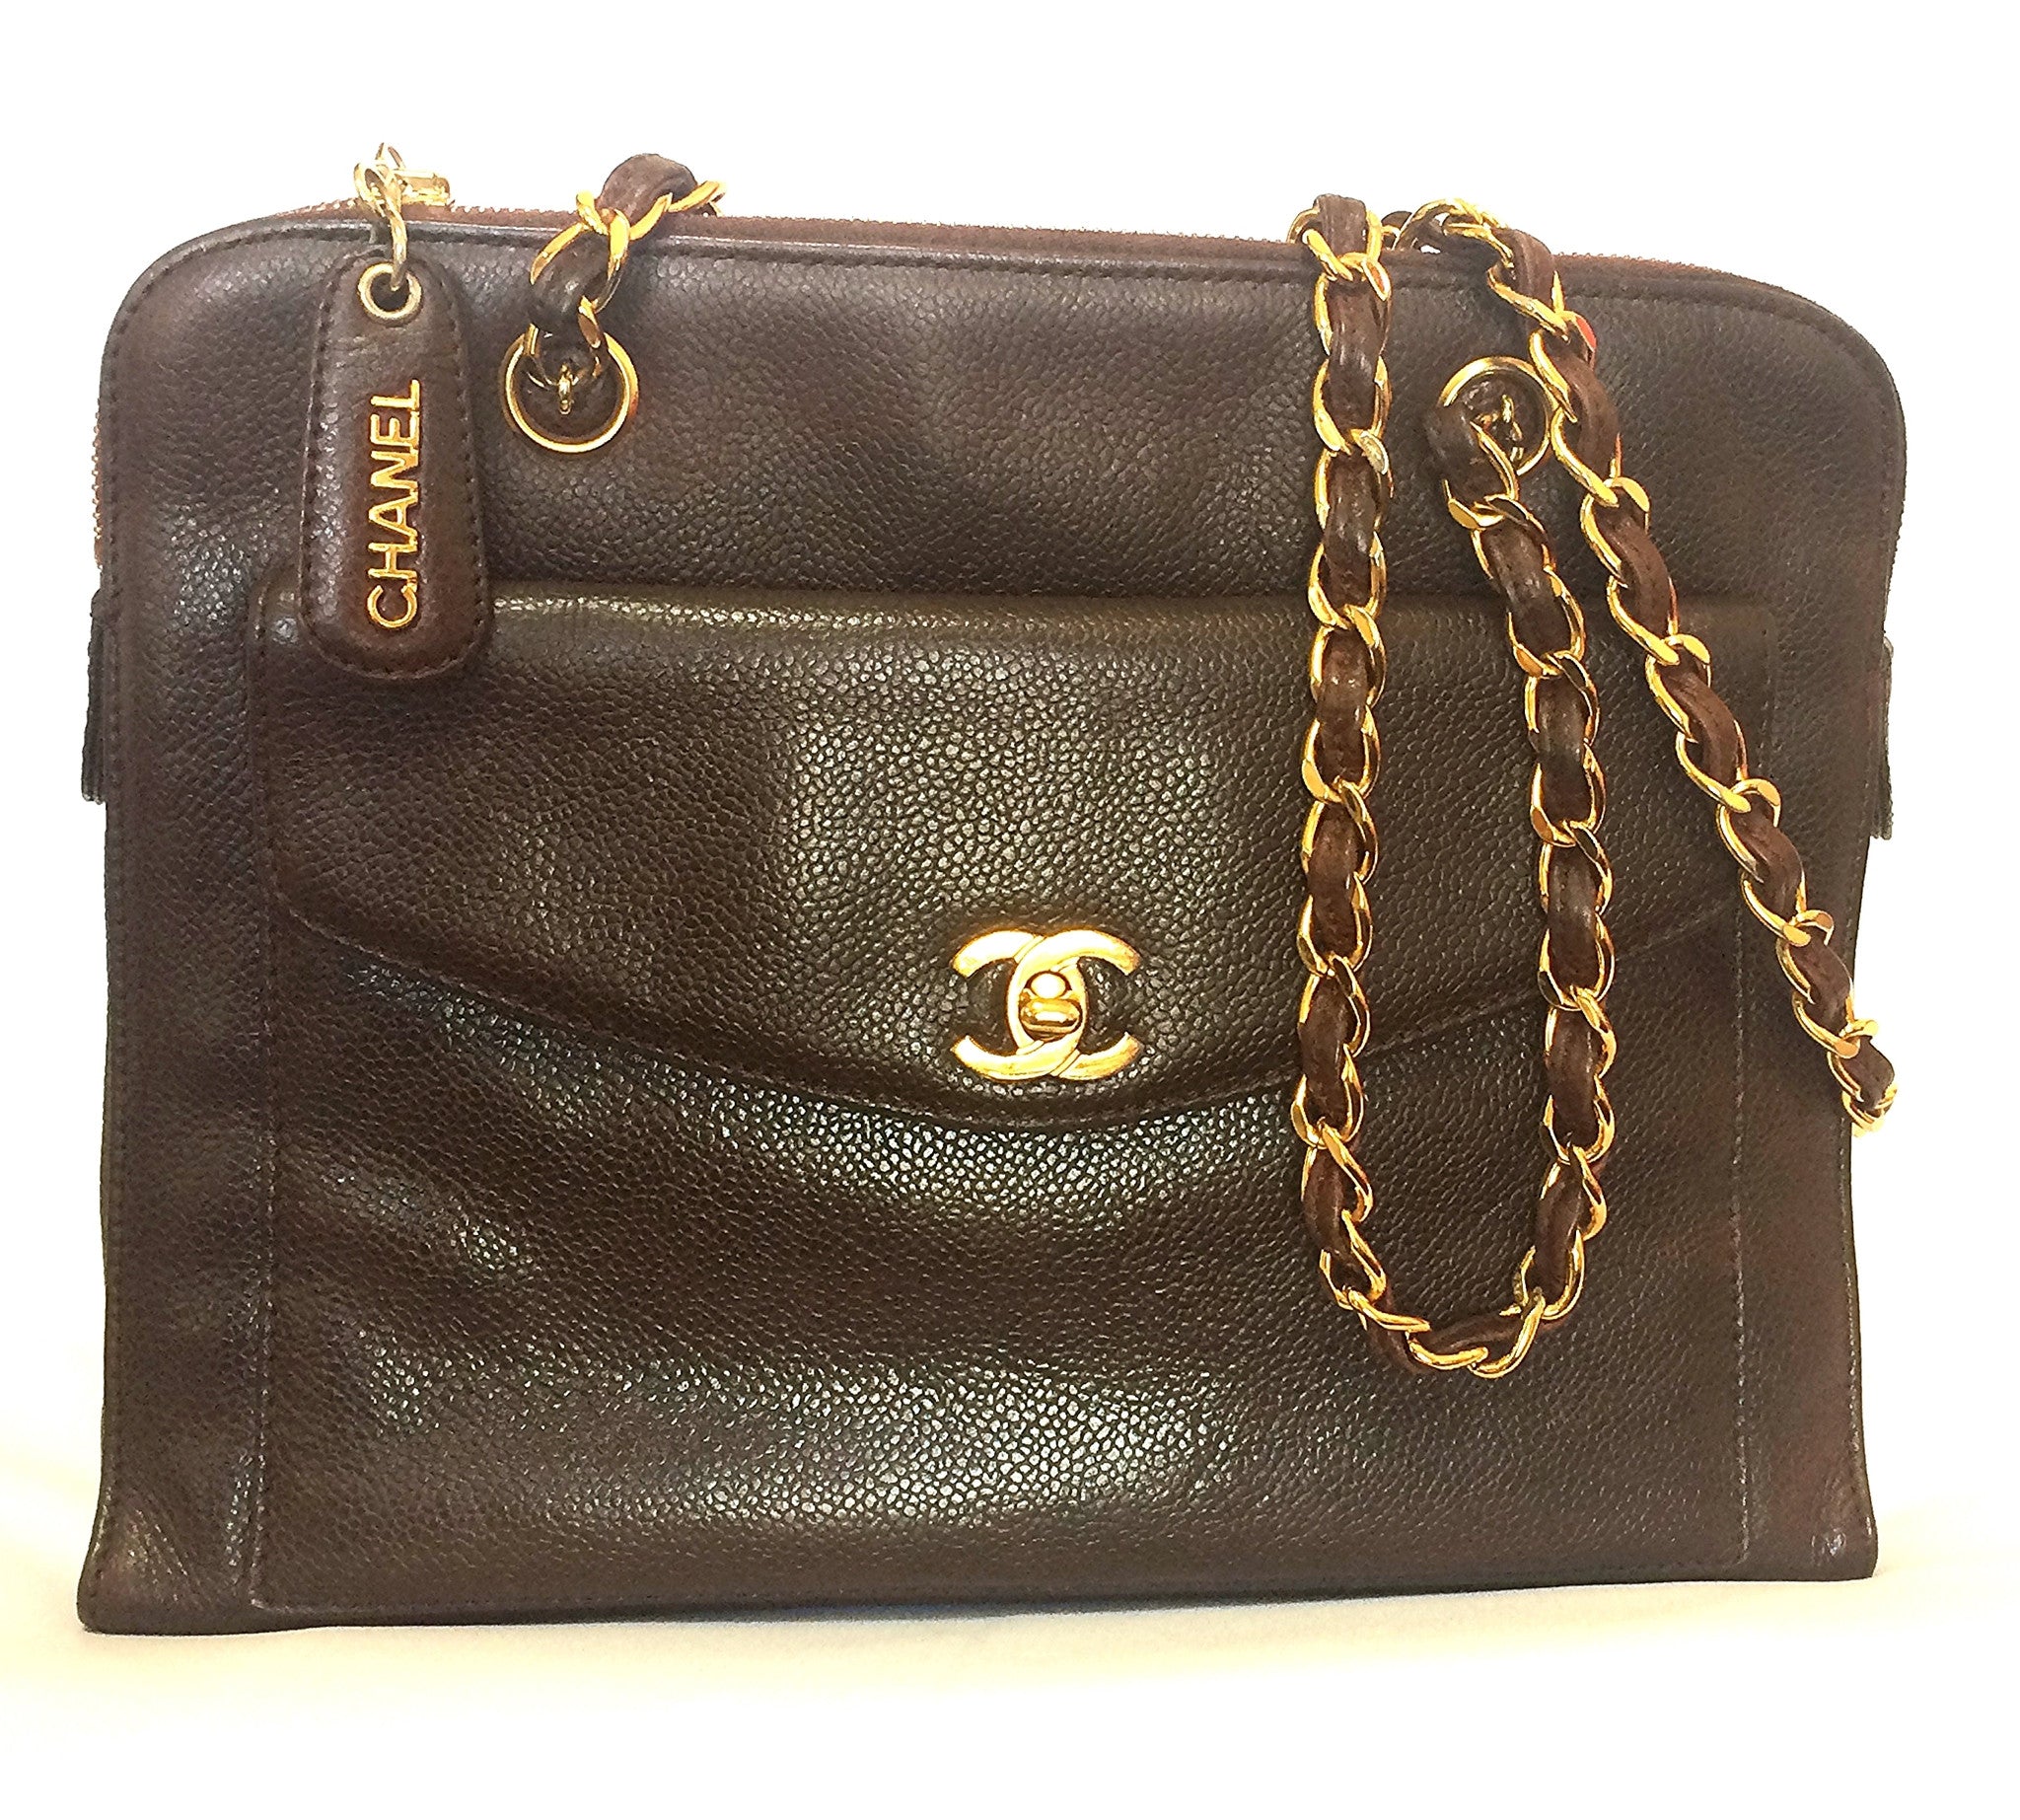 Vintage CHANEL dark brown caviarskin chain shoulder tote bag with